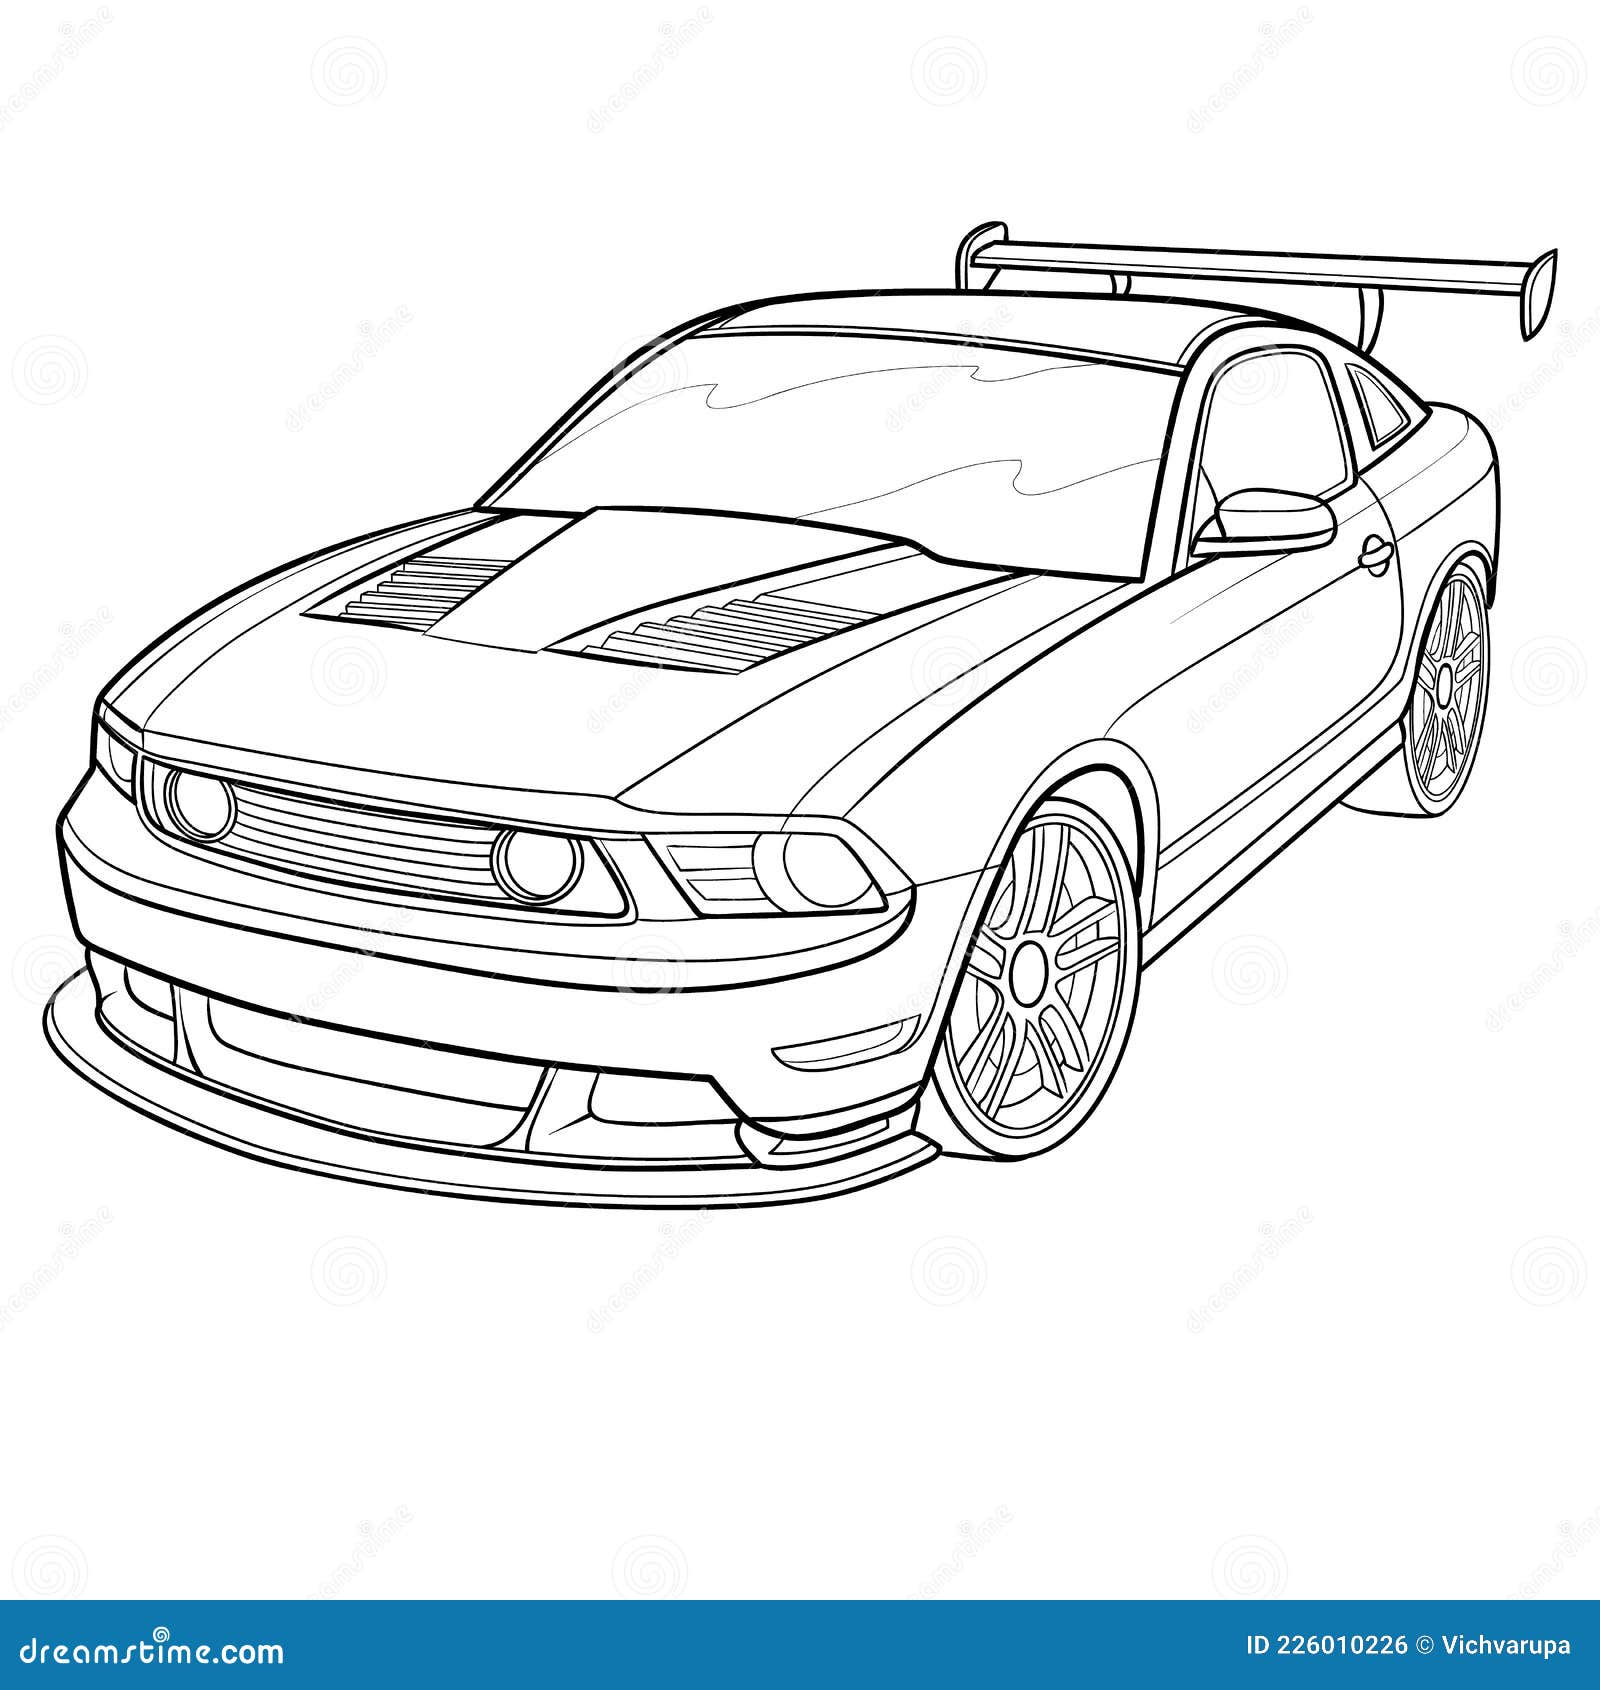 Car Club Drawing | Infamous Jims Auto Art - Sketches, Designs, Fine Art